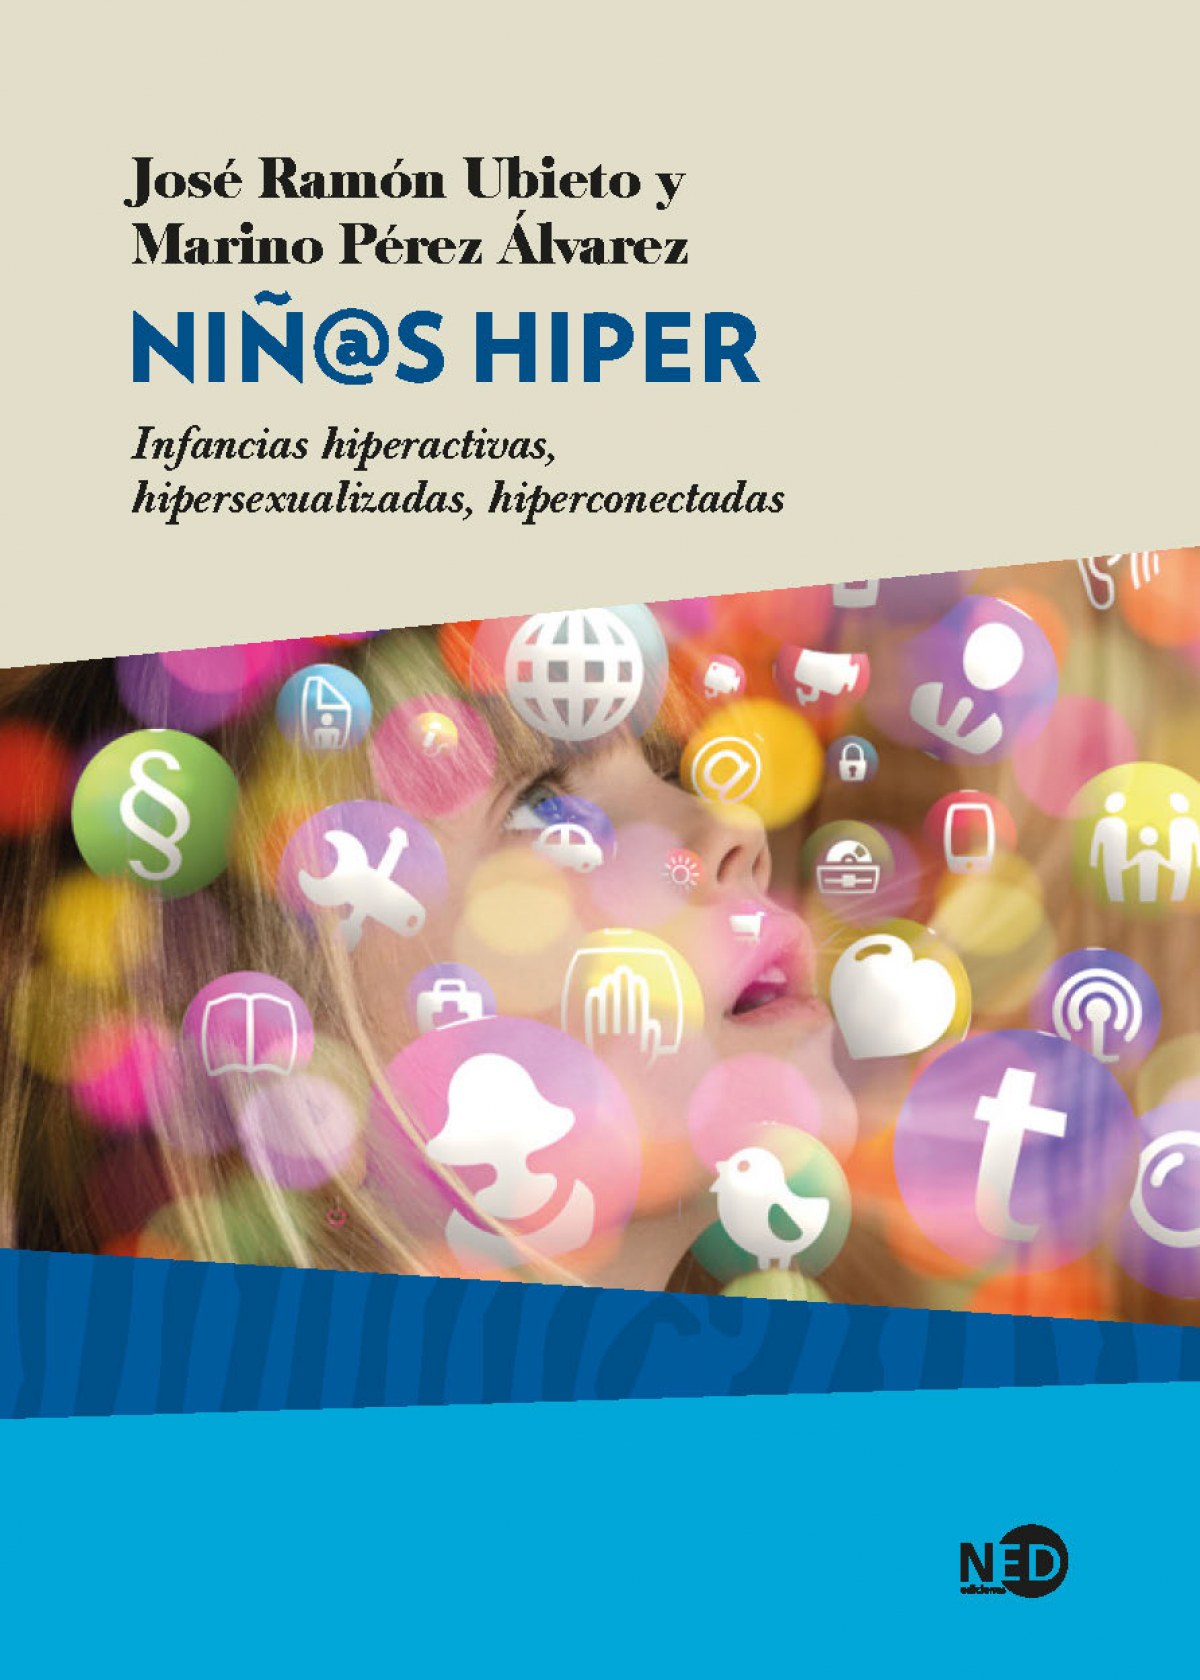 NIÑ@S HIPER Infancias hiperactivas, hipersexualizadas, hiperconectadas - Ubieto, José Ramón/Pérez Álvarez, Marino